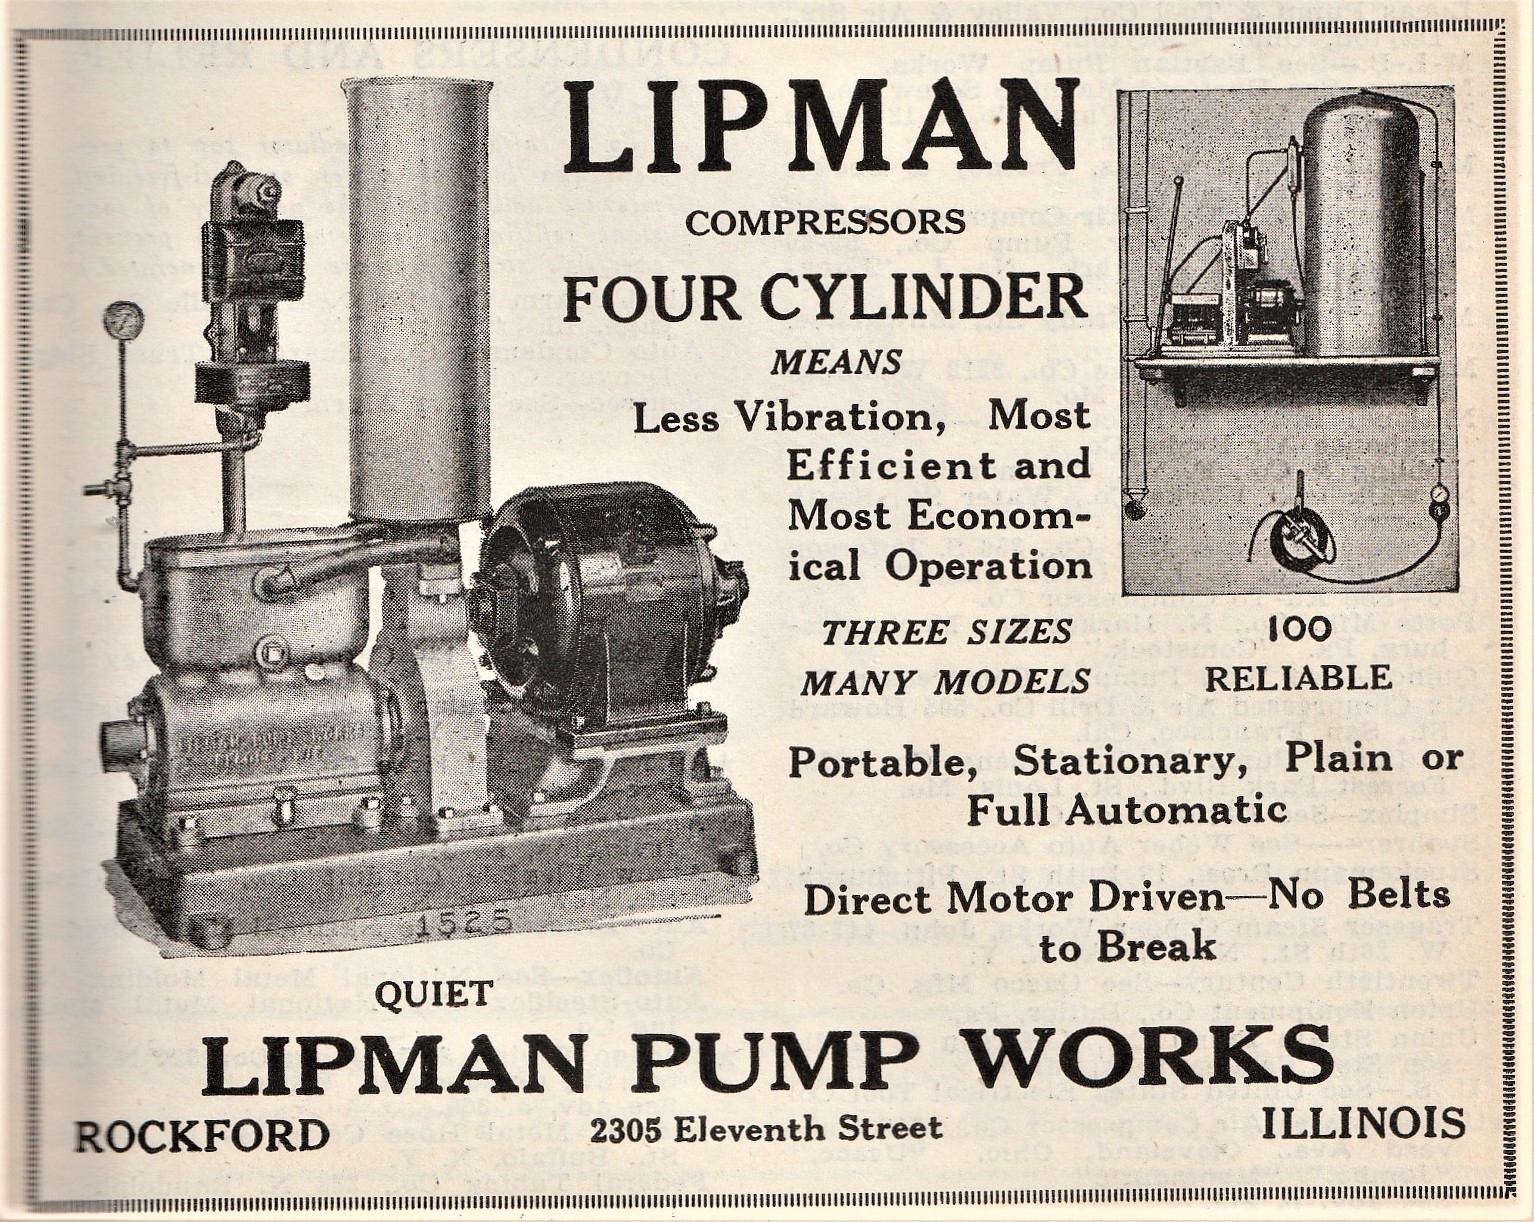 Vintage Shop Equipment: Air Compressors | THE SHOP